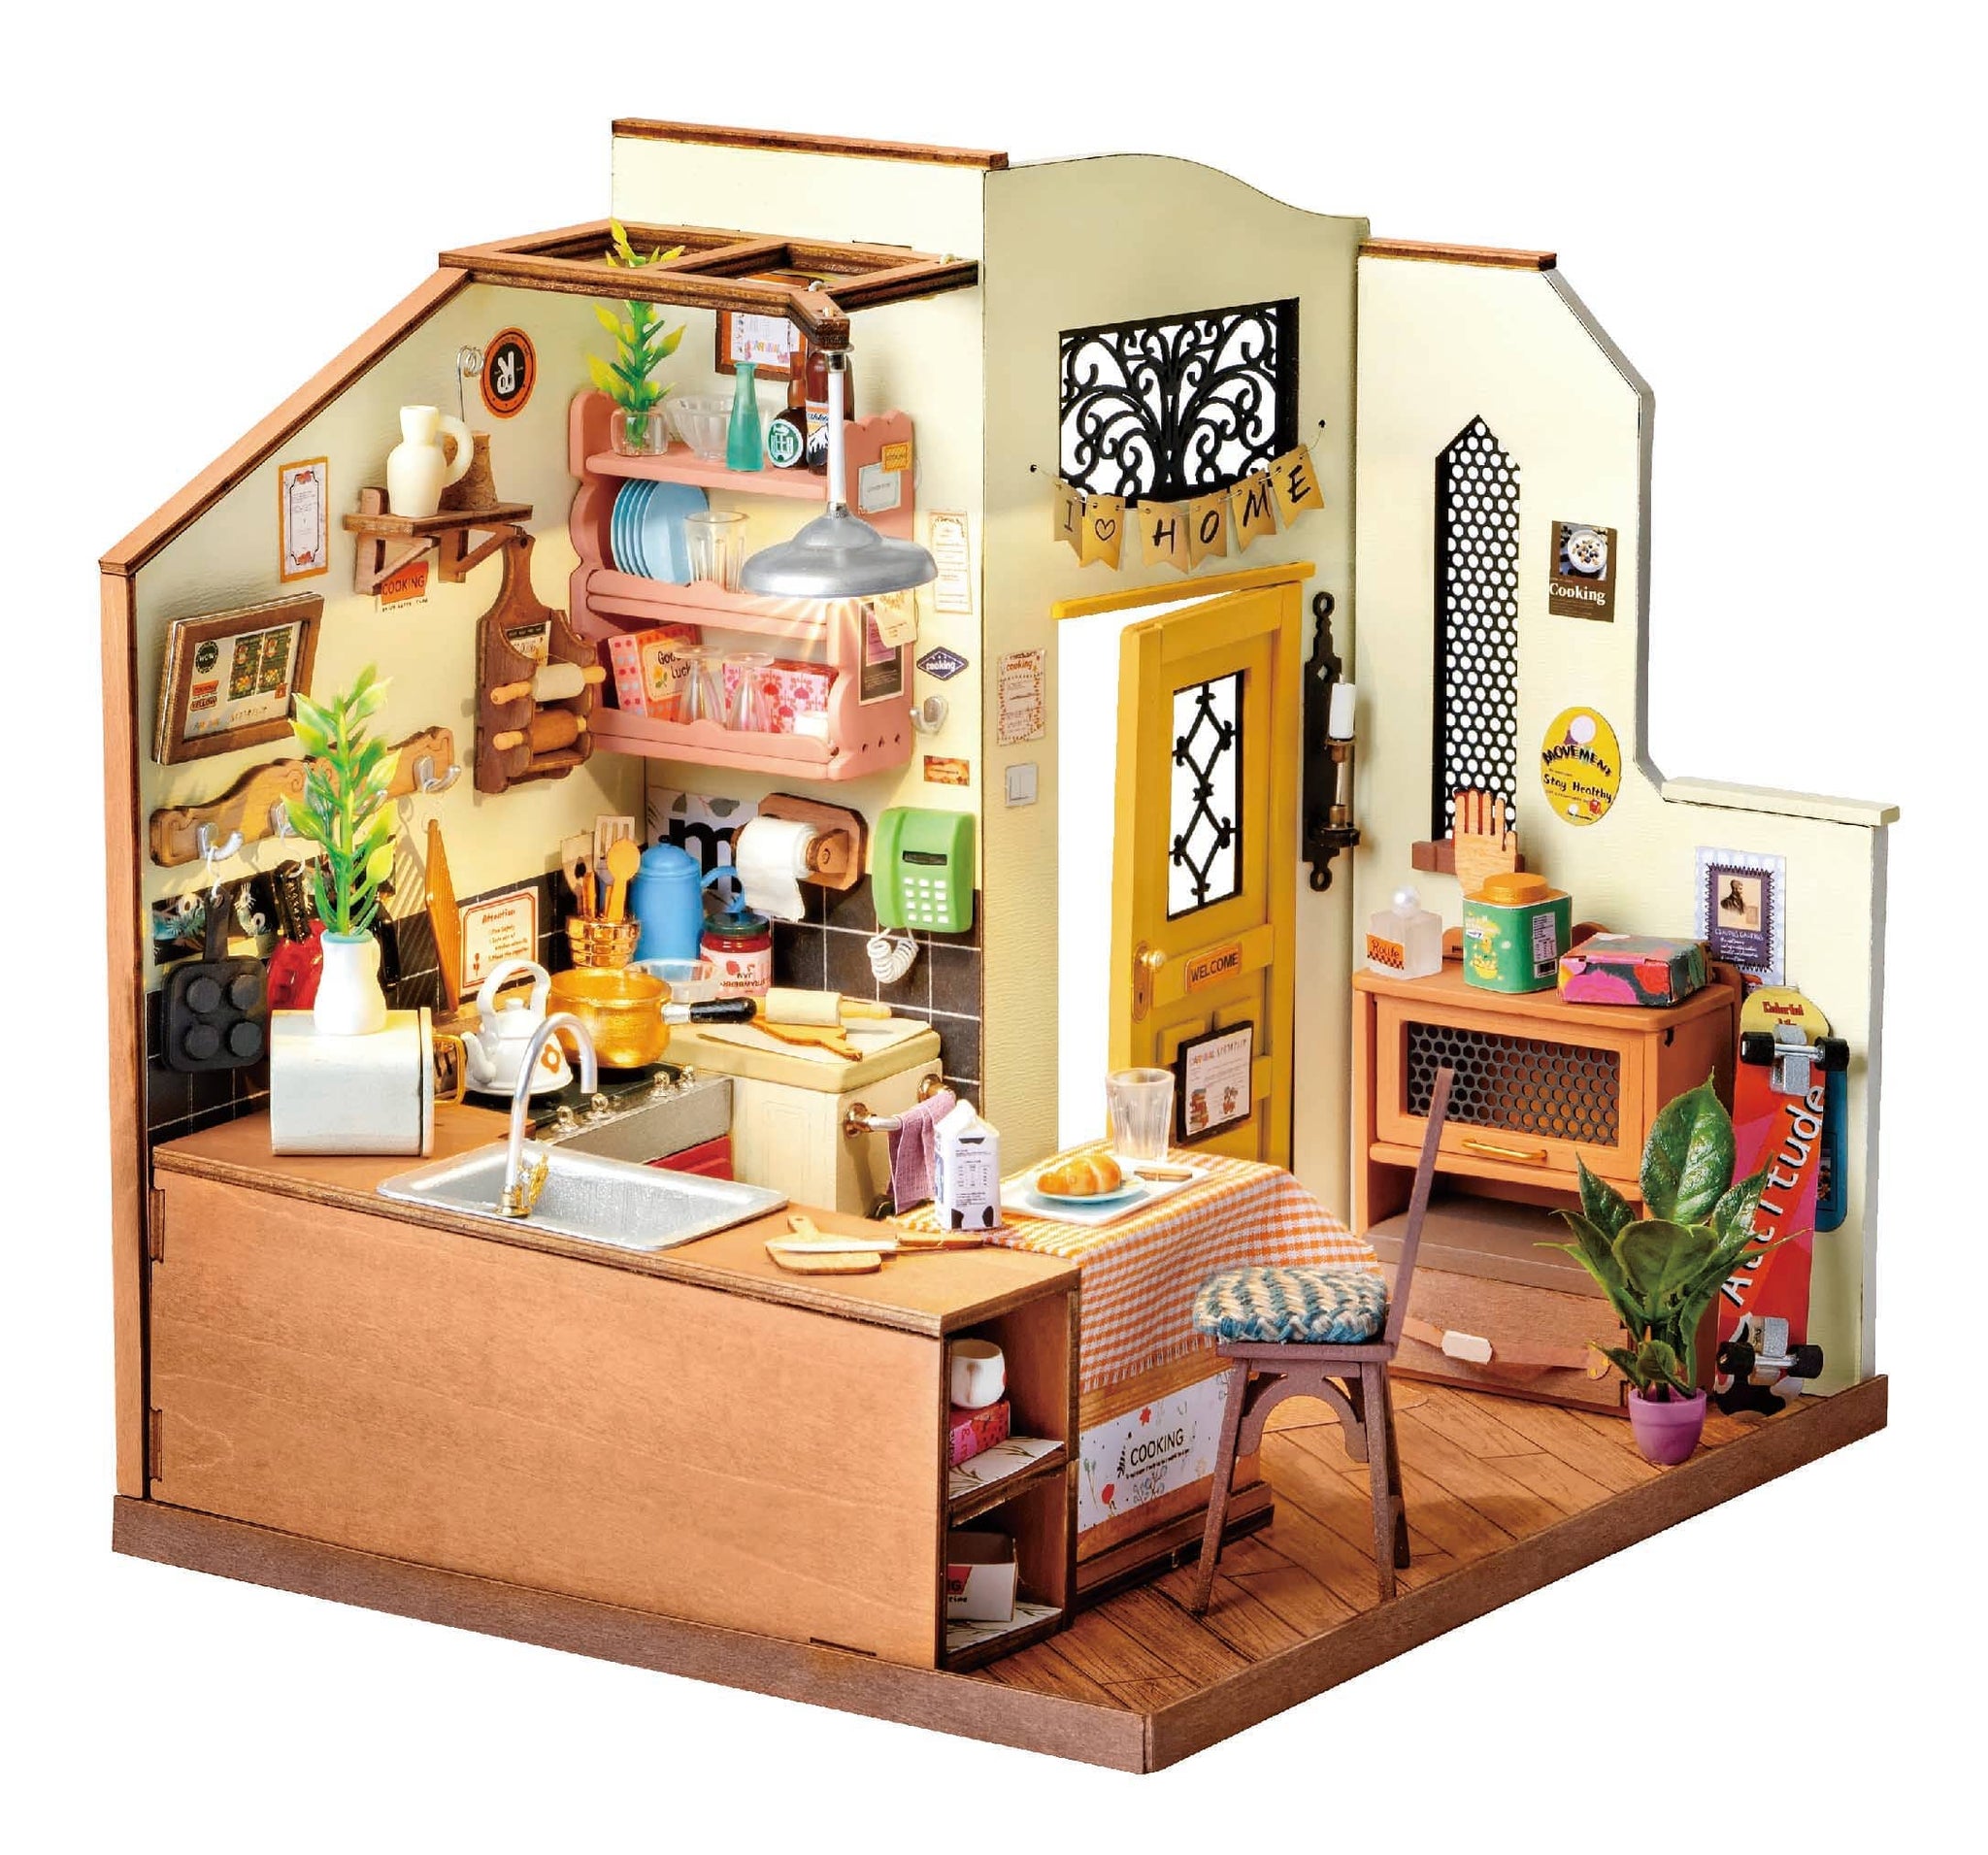 Hands Craft DIY Miniature Dollhouse Kit | Jason's Kitchen